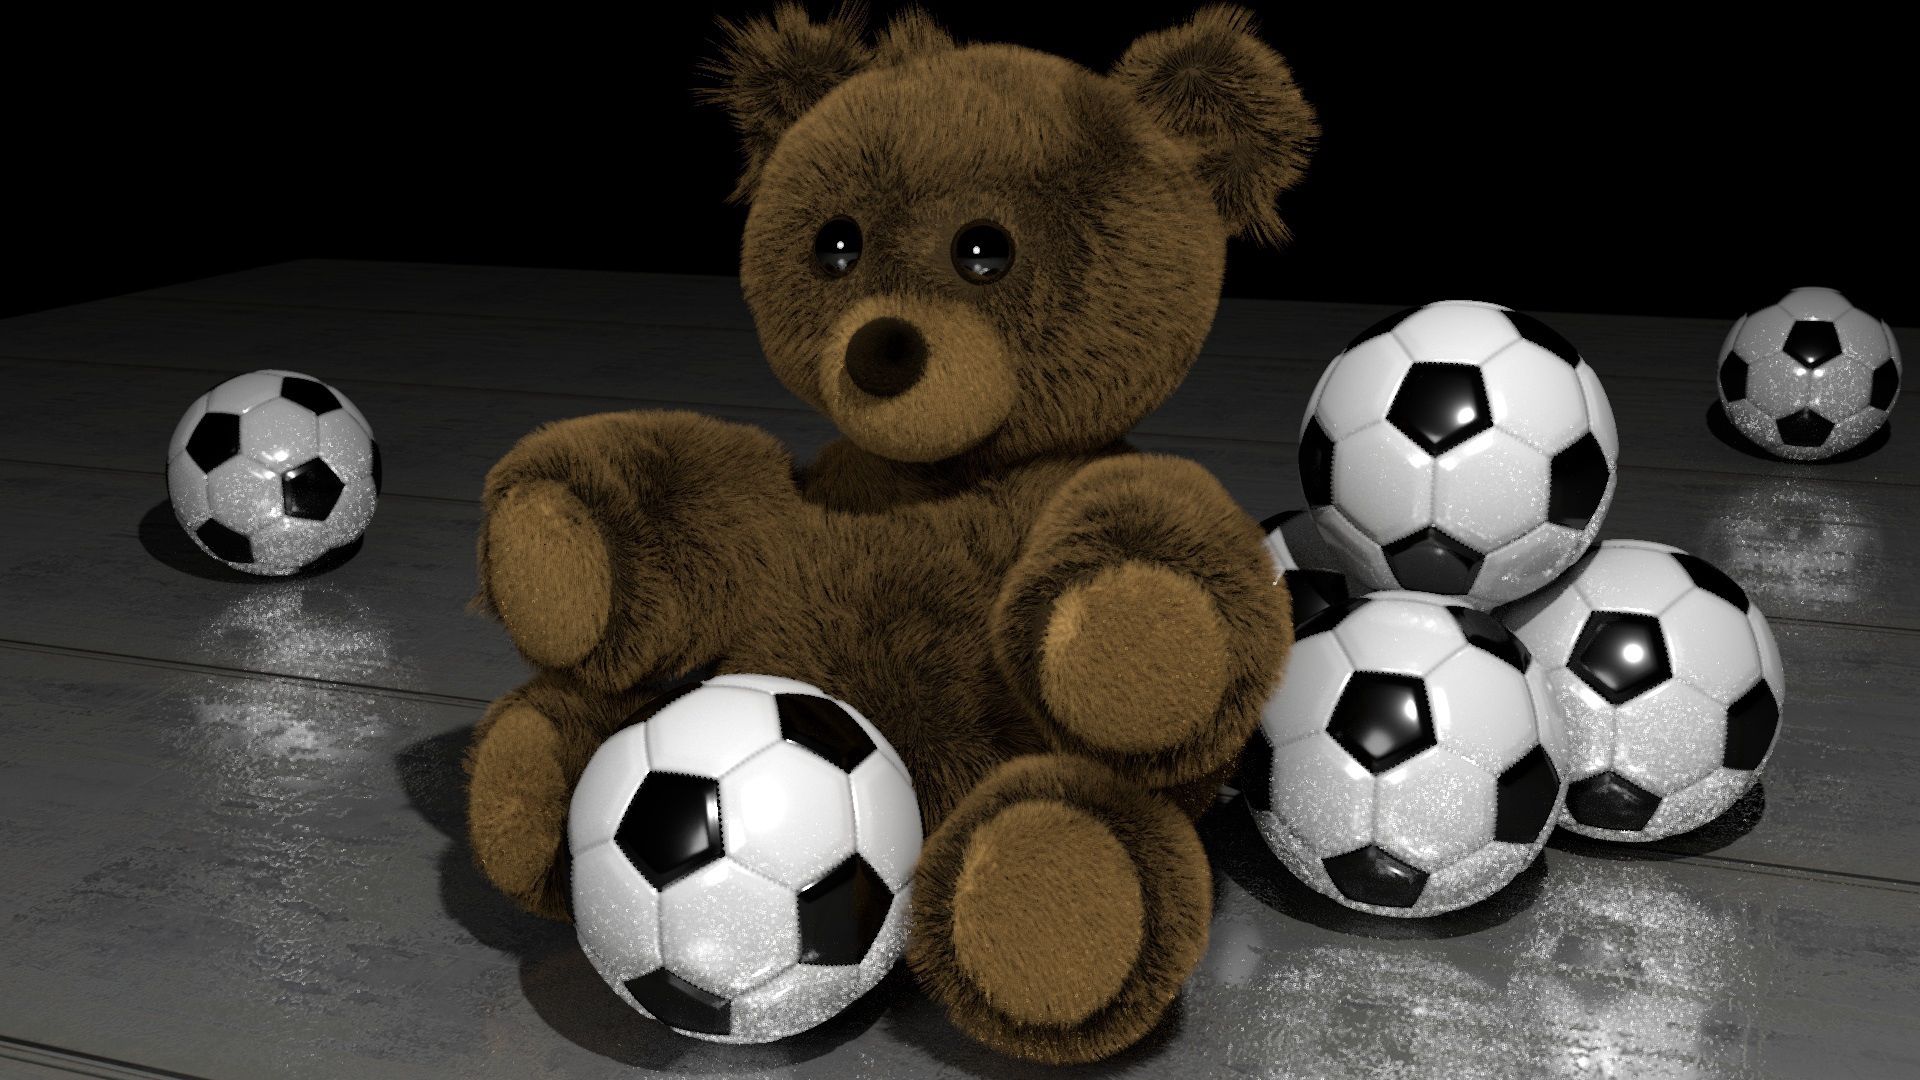 toys, football balls, teddy bear, miscellanea, miscellaneous, footballs